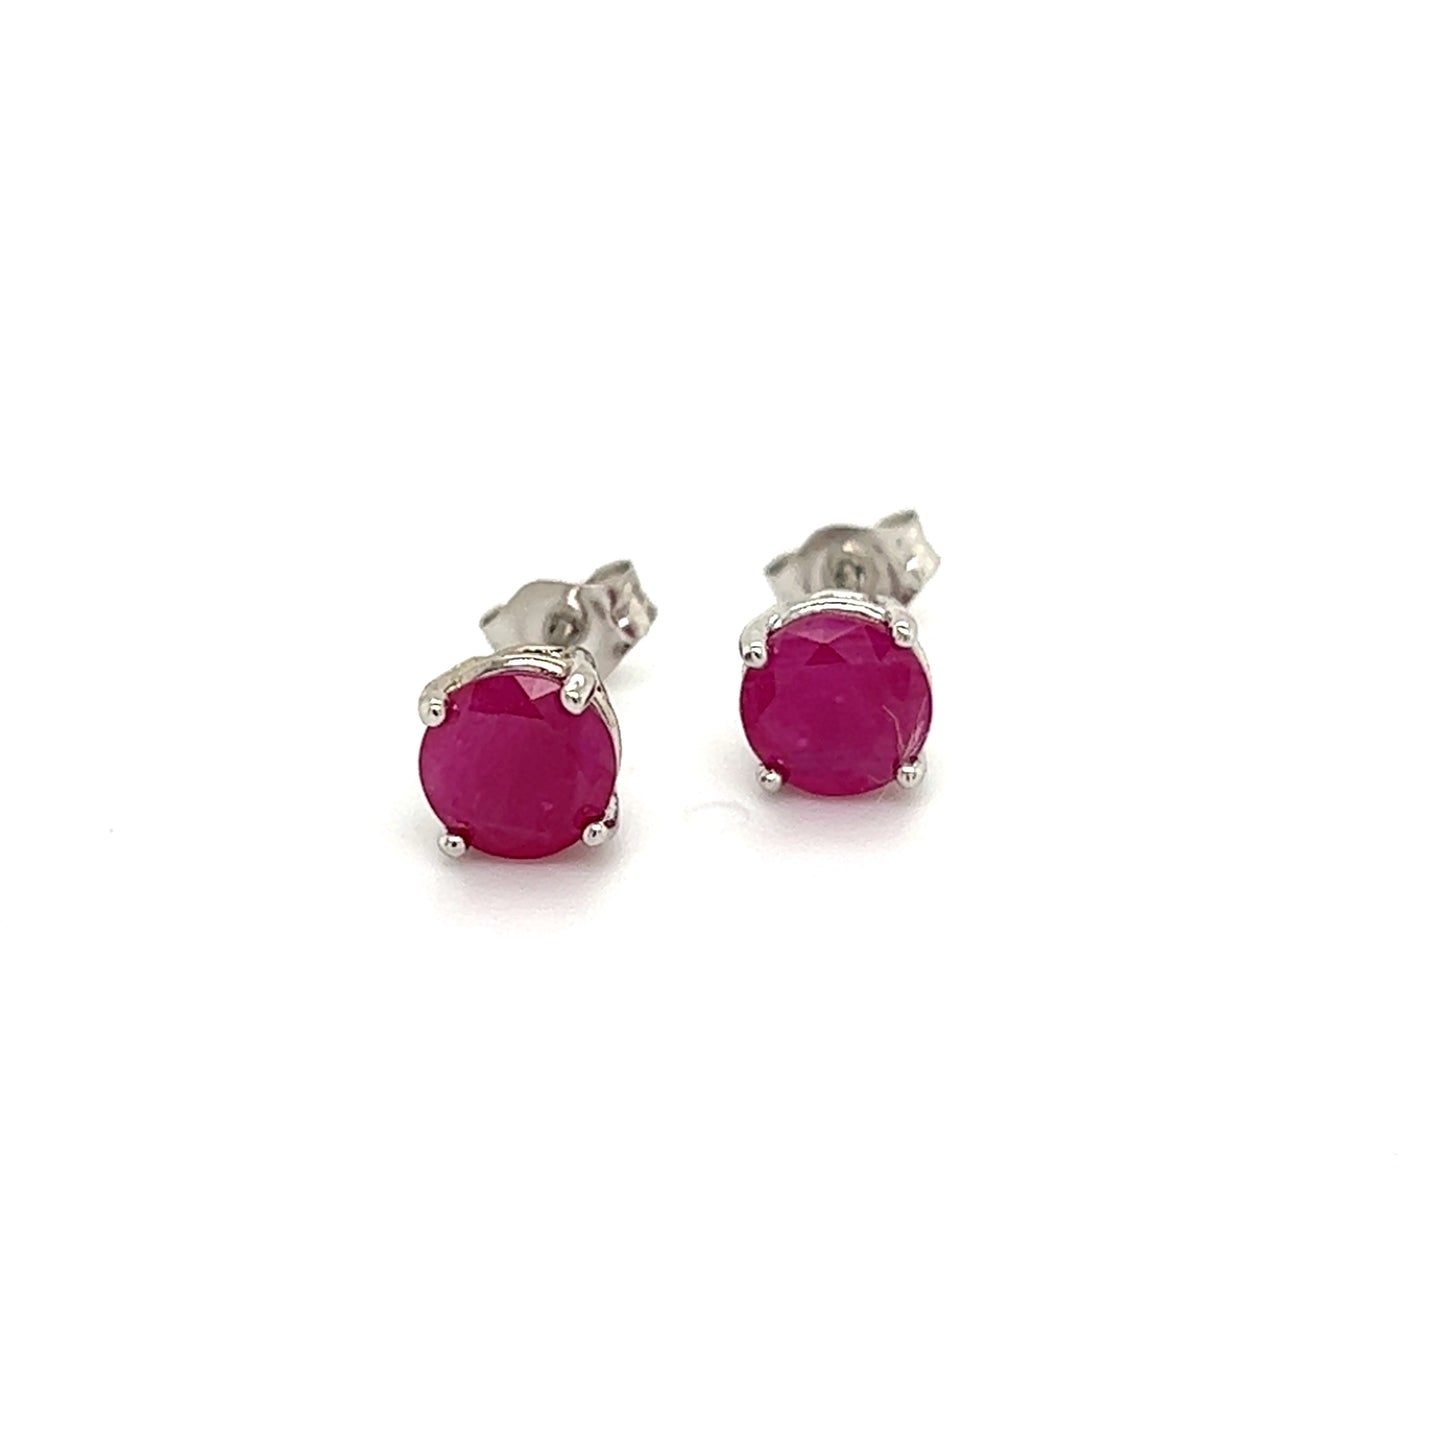 Natural Ruby Stud Earrings 14k Gold 1.91 TCW 1.28 Grams Certified $2,290 210750 - Certified Estate Jewelry